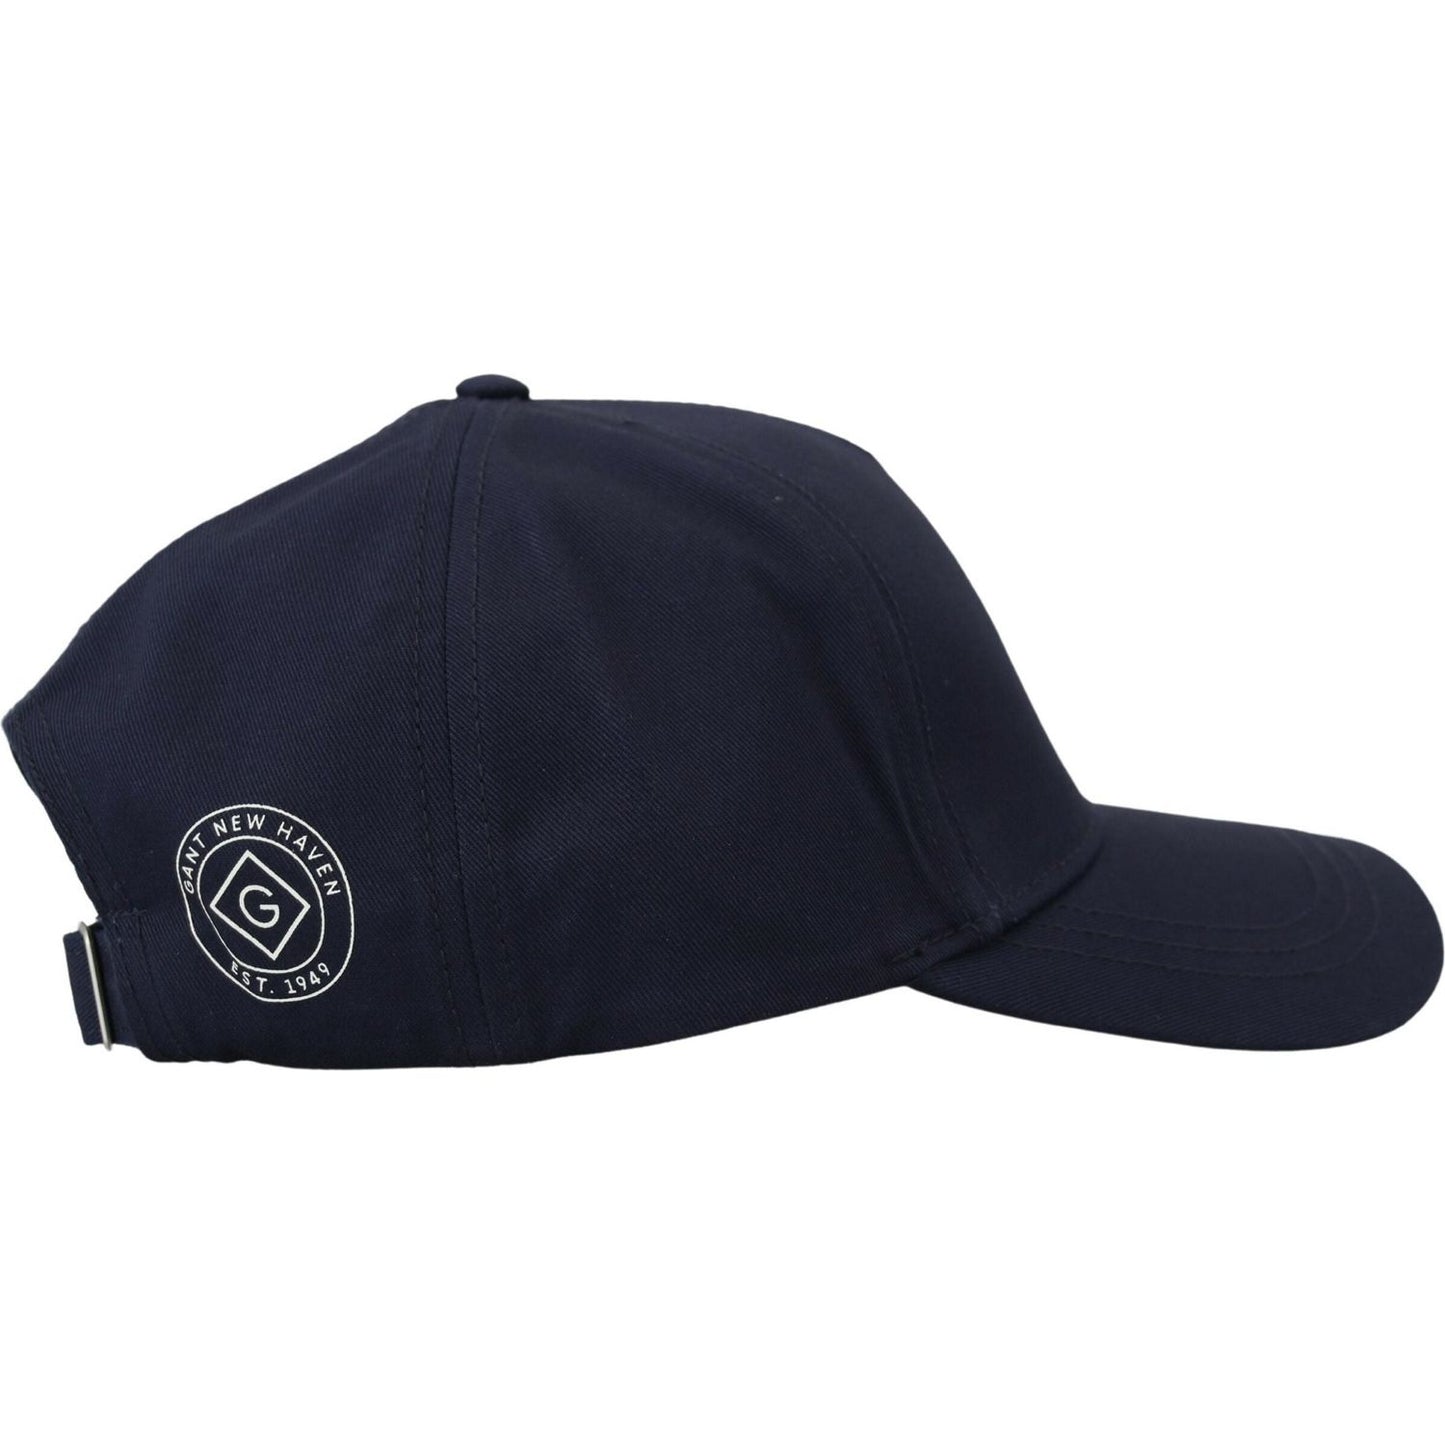 Gant Elegant Blue Cotton Baseball Hat blue-cotton-logo-print-baseball-cap-casual-hat